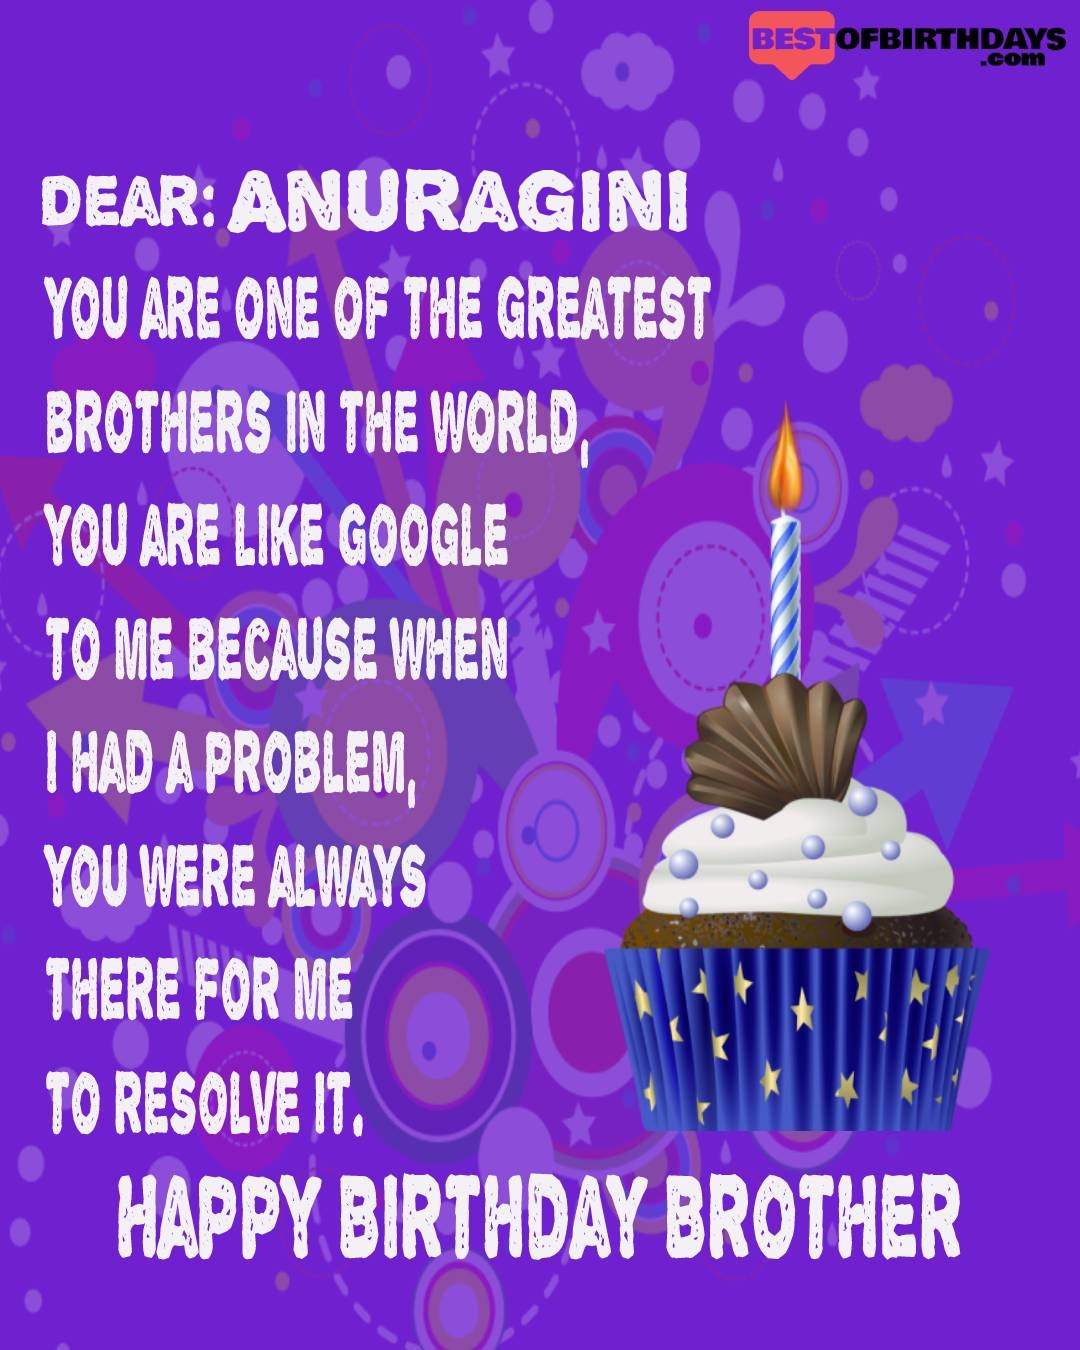 Happy birthday anuragini bhai brother bro